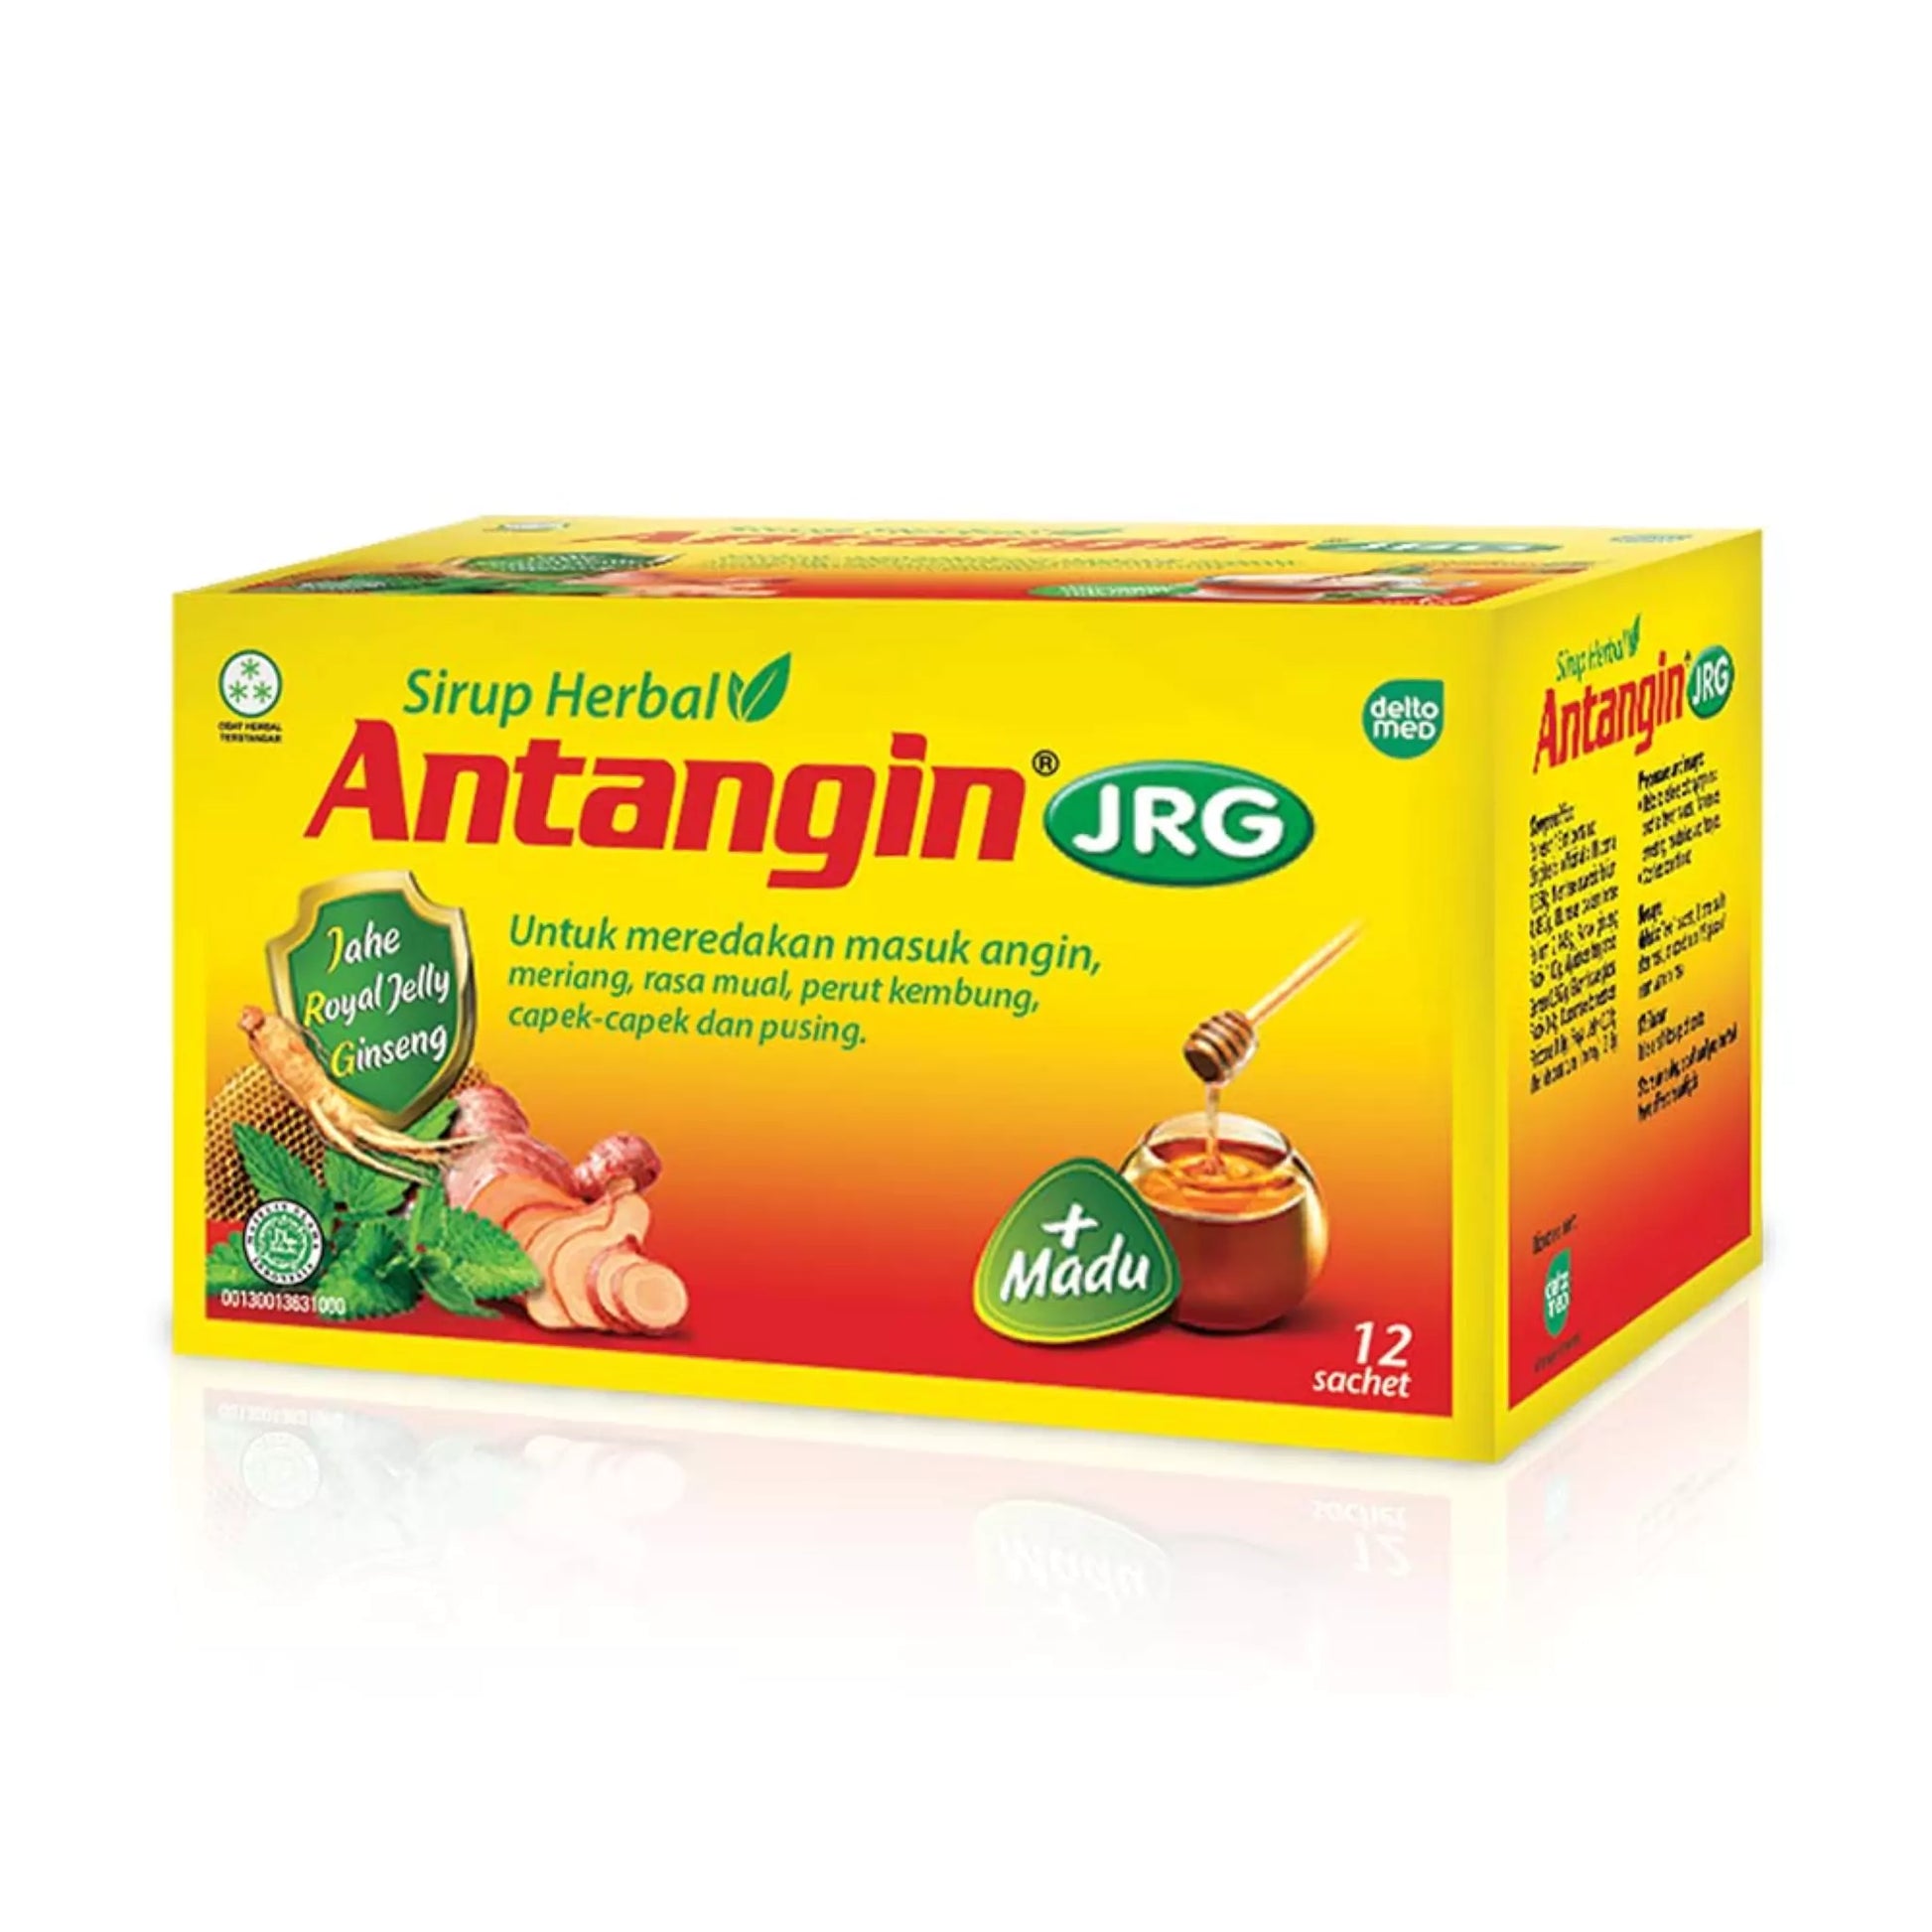 Antangin JRG 12 Sachet For Sale